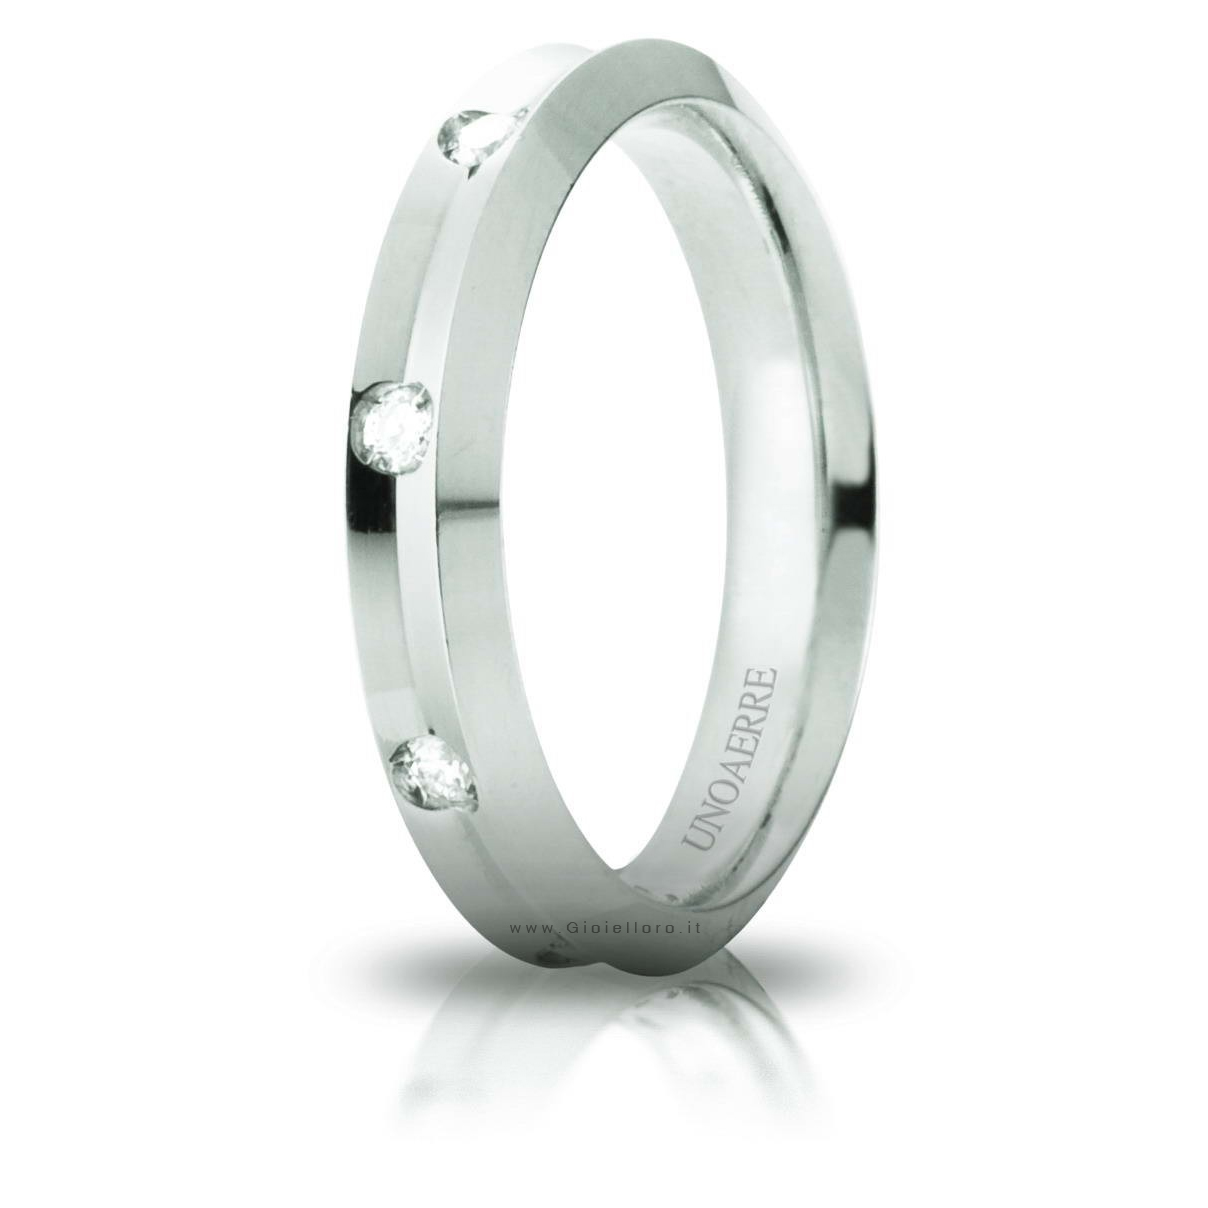 UnoAerre Brillanti Promesse Wedding Ring  8 Diamonds